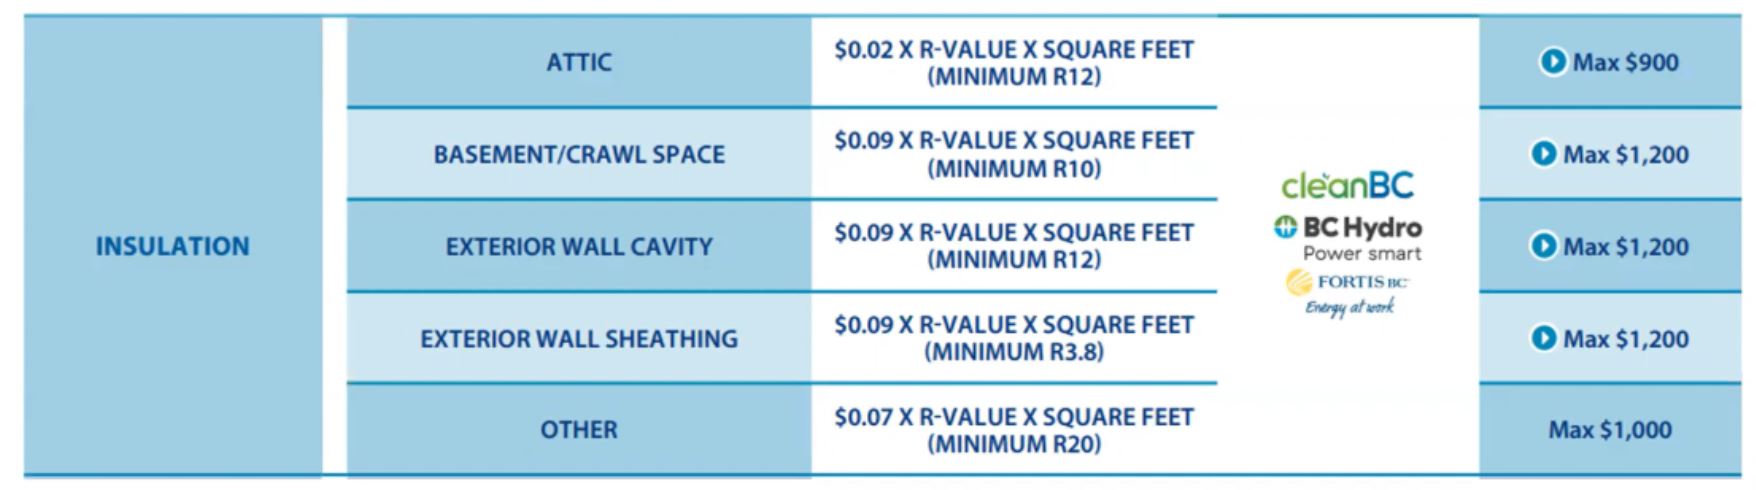 bonus-offers-webinar-insulation-rebate-introduction-on-guides